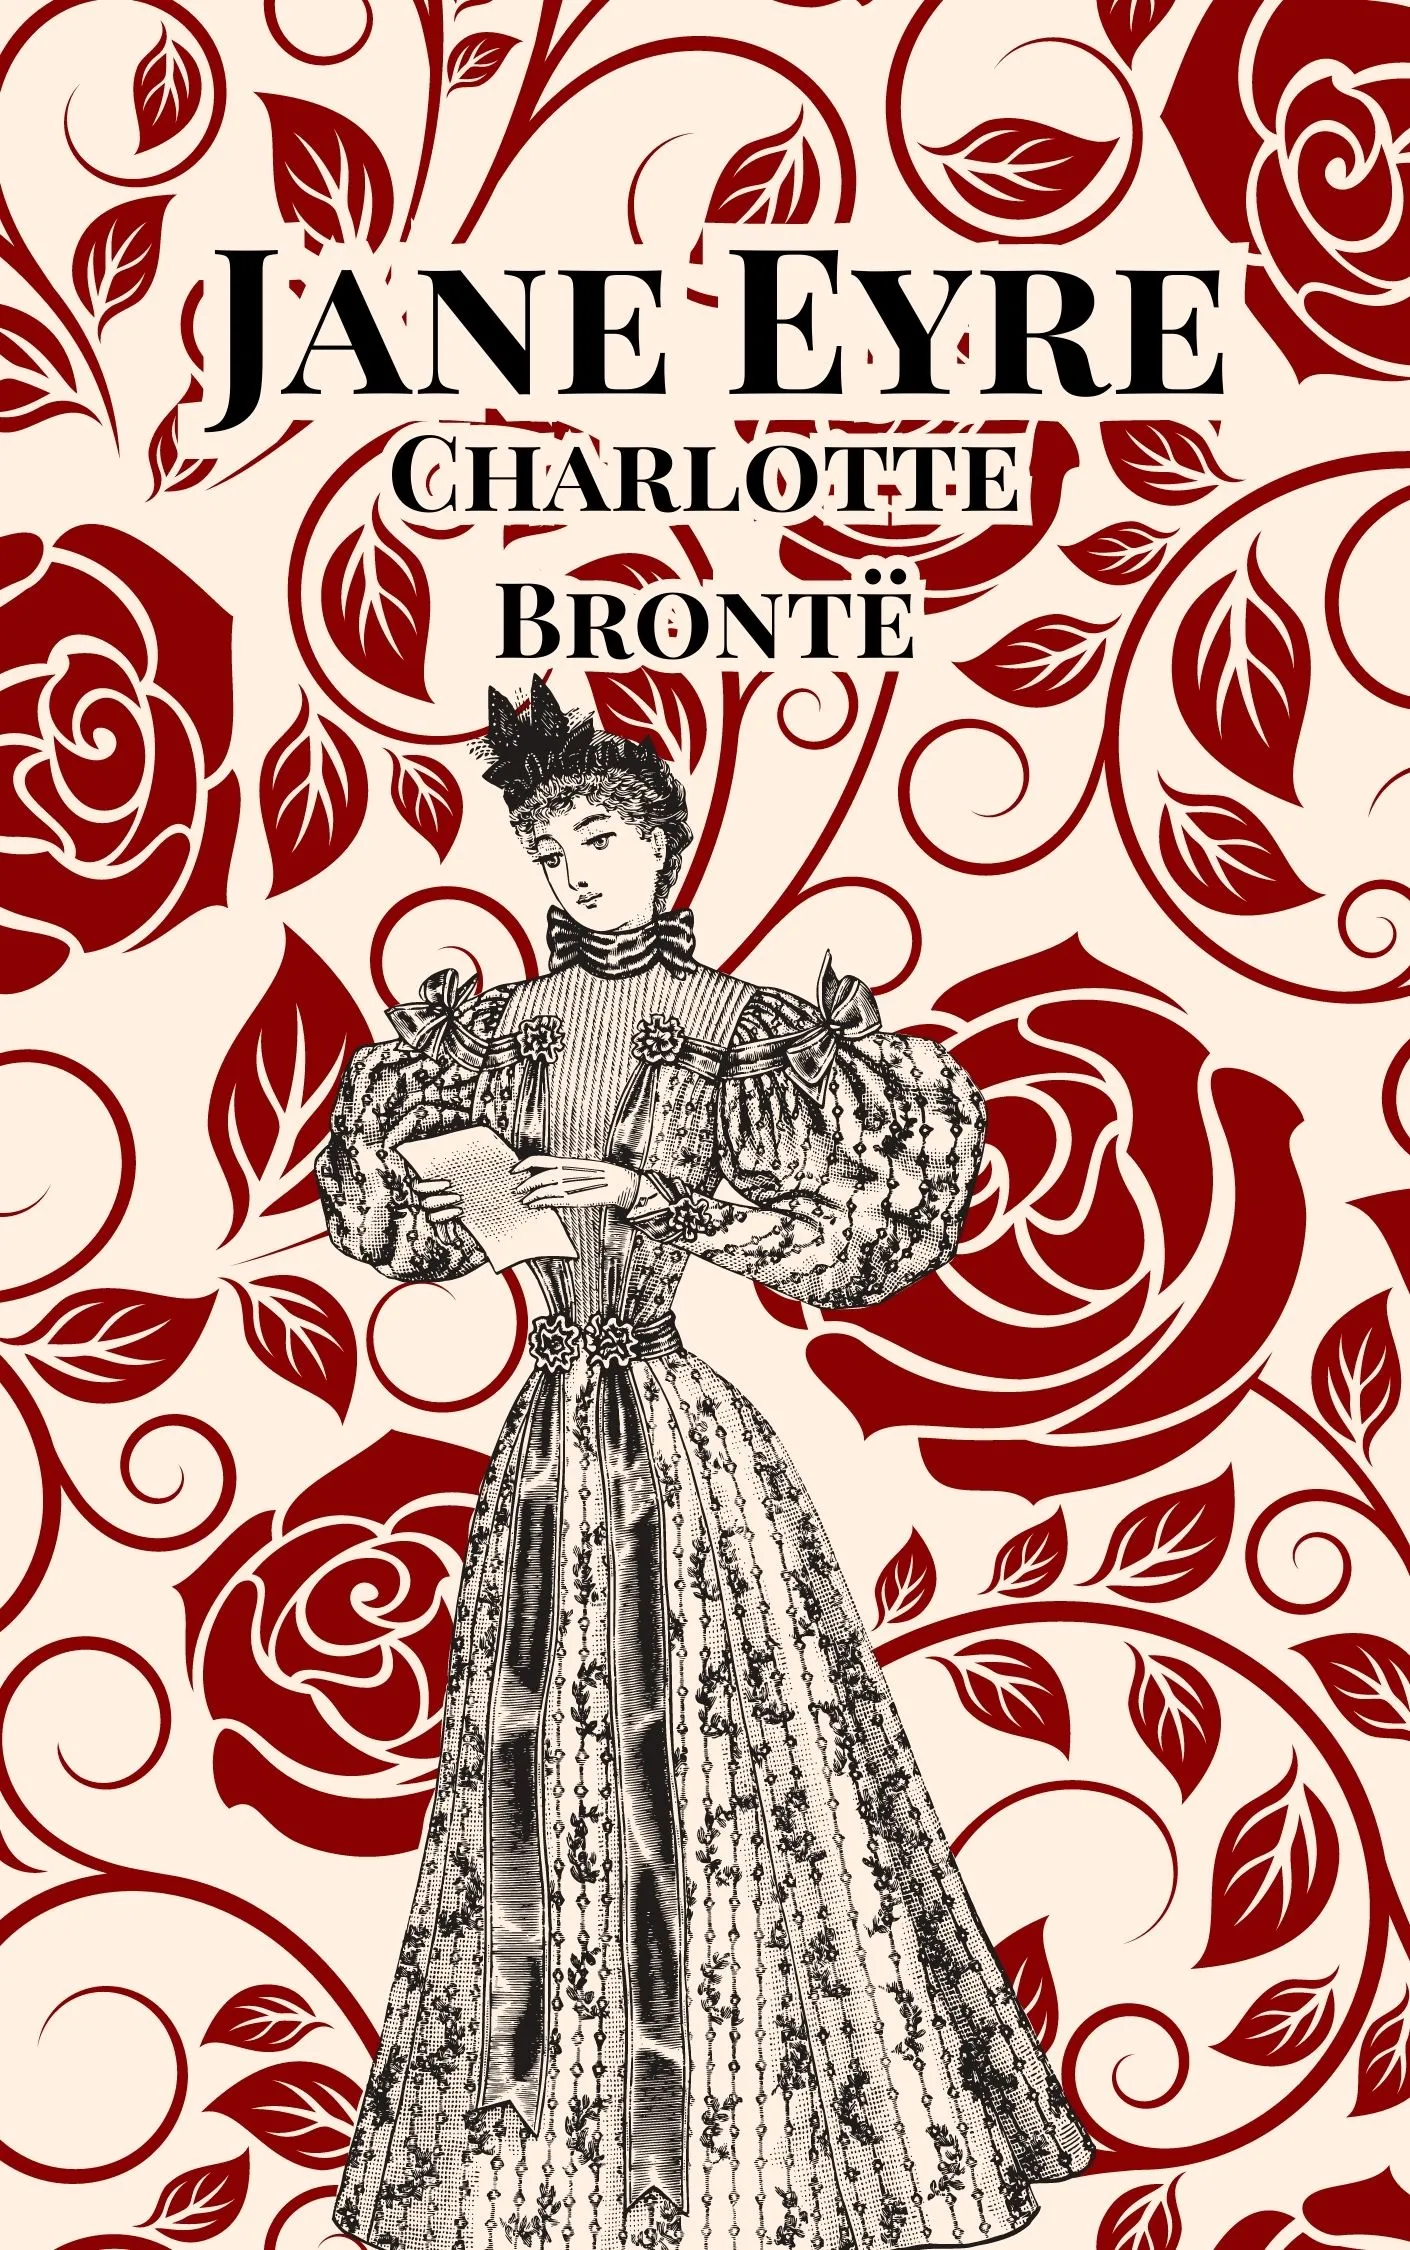 Jane Eyre by Charlotte Bronte Audiobook